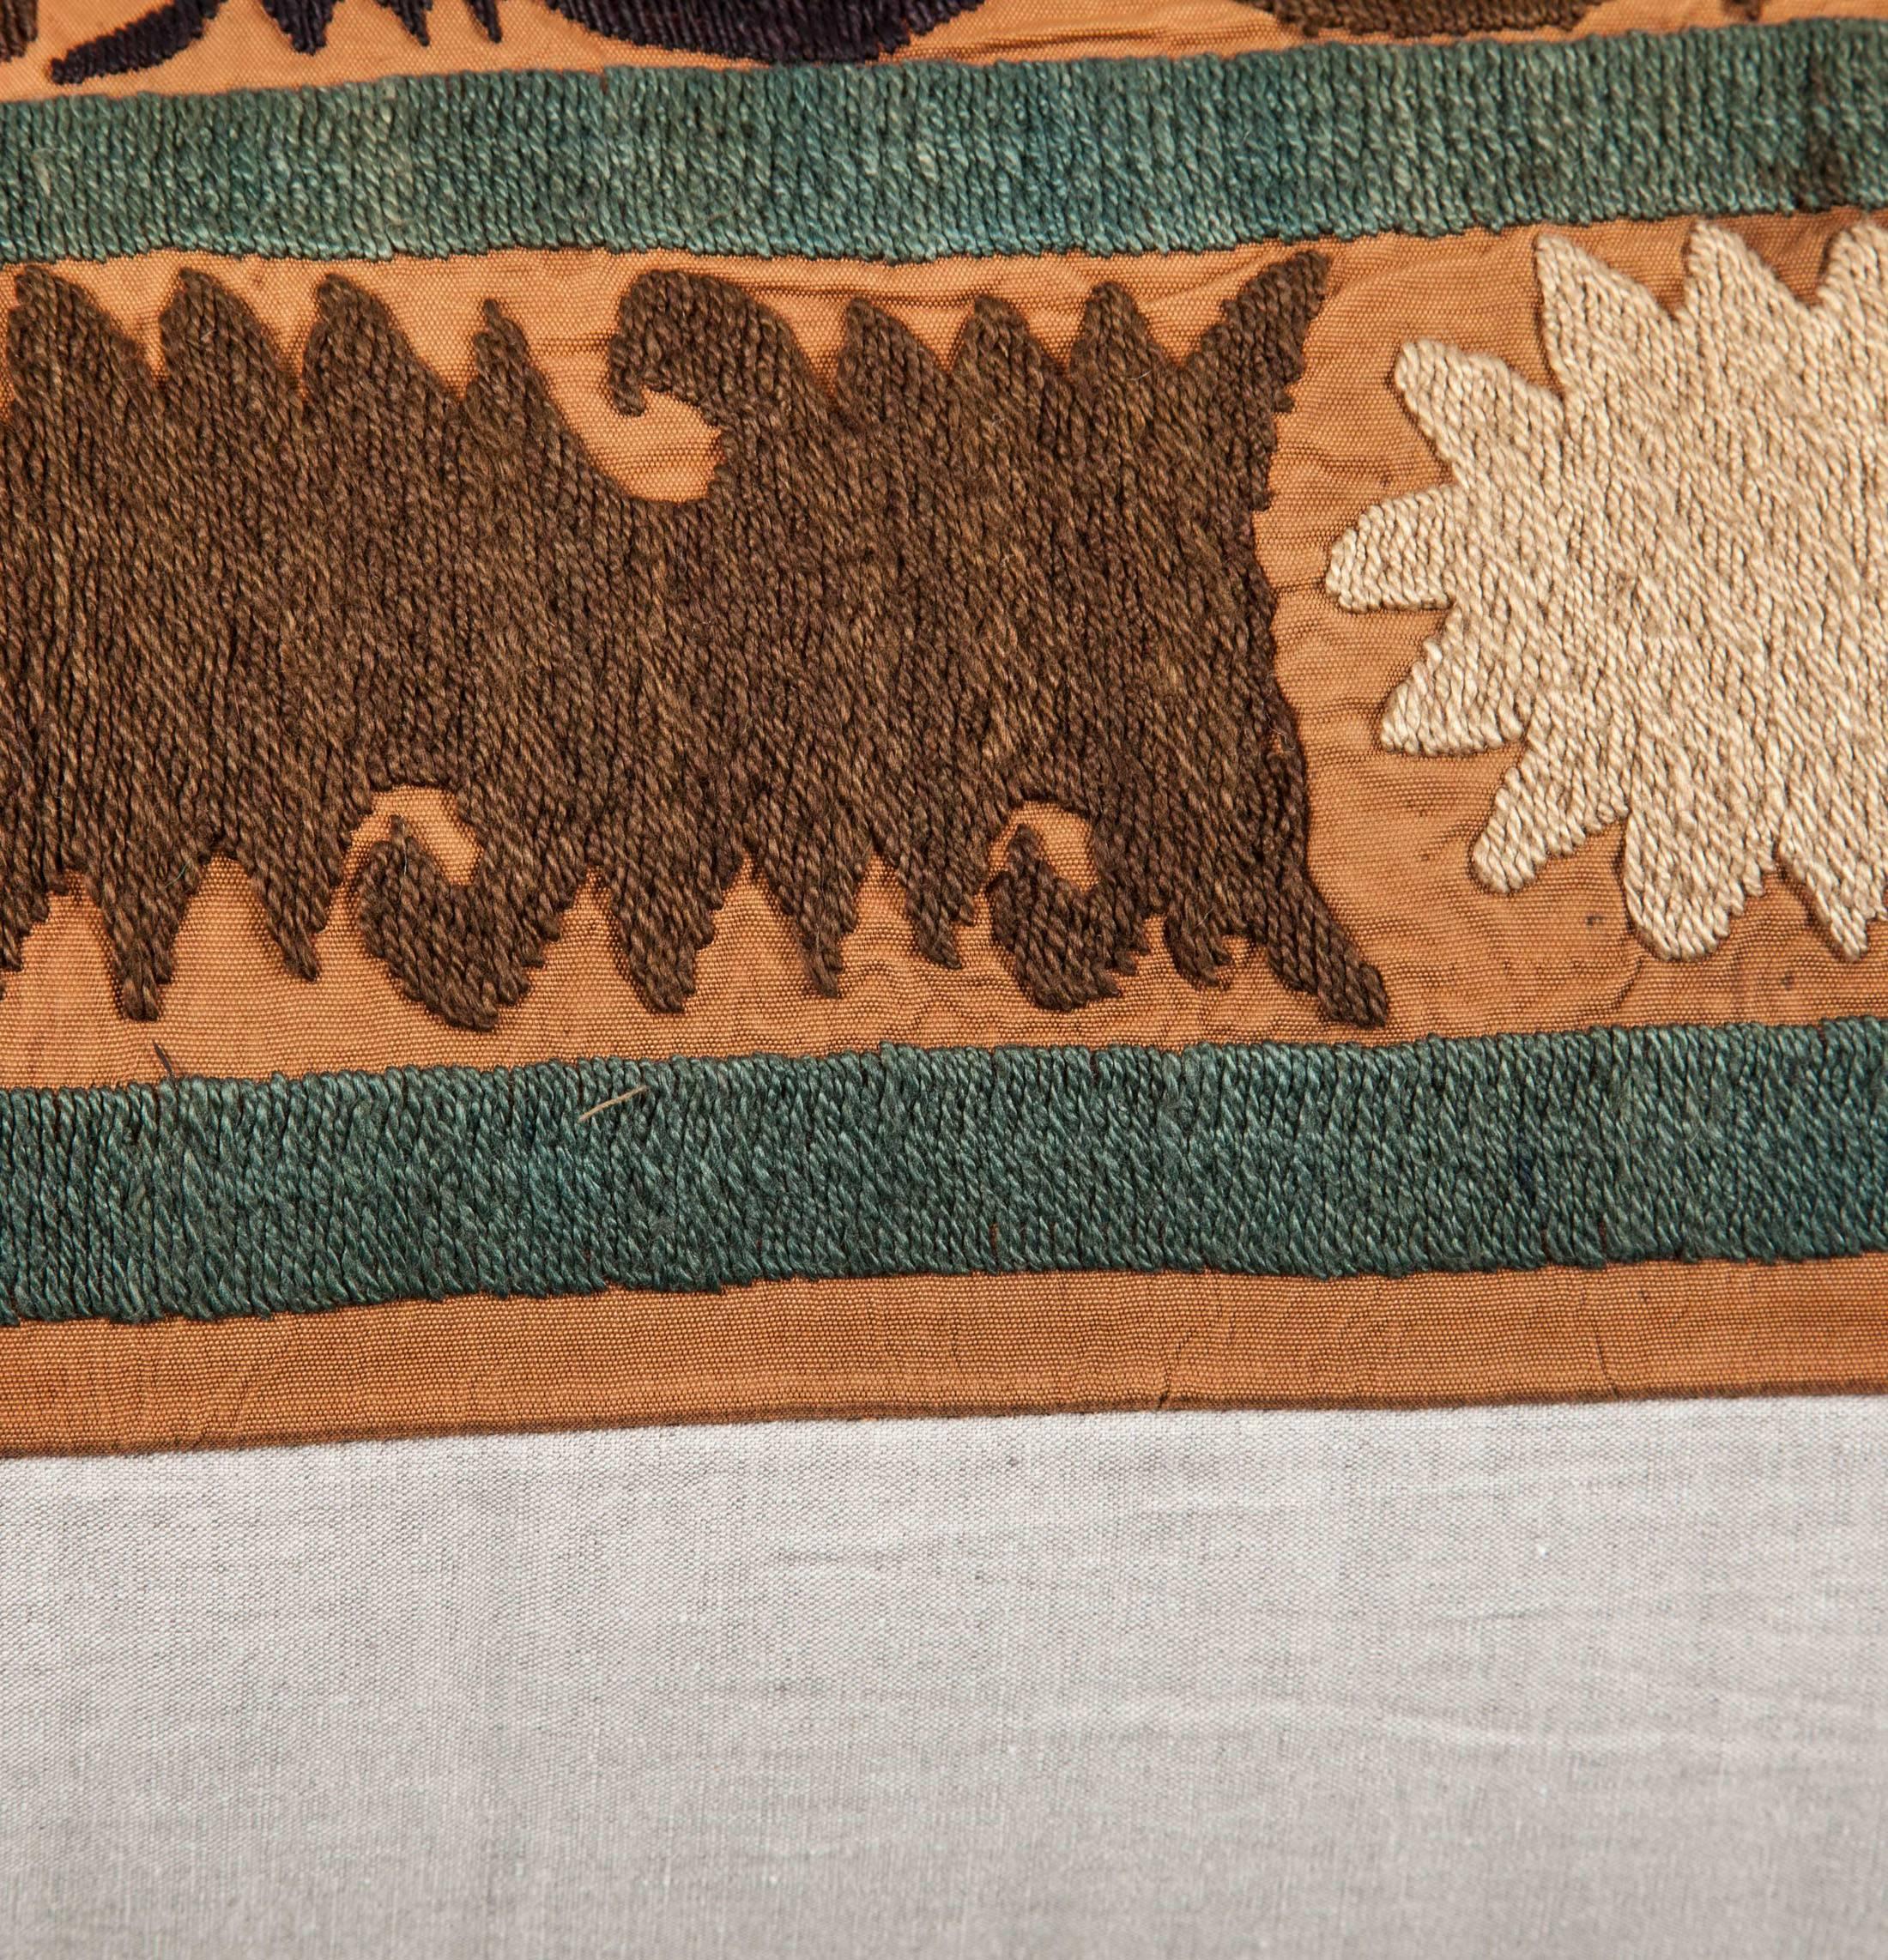 Vintage Uzbek Embroidered Pillow (Large), Central Asia, 1970s For Sale 2